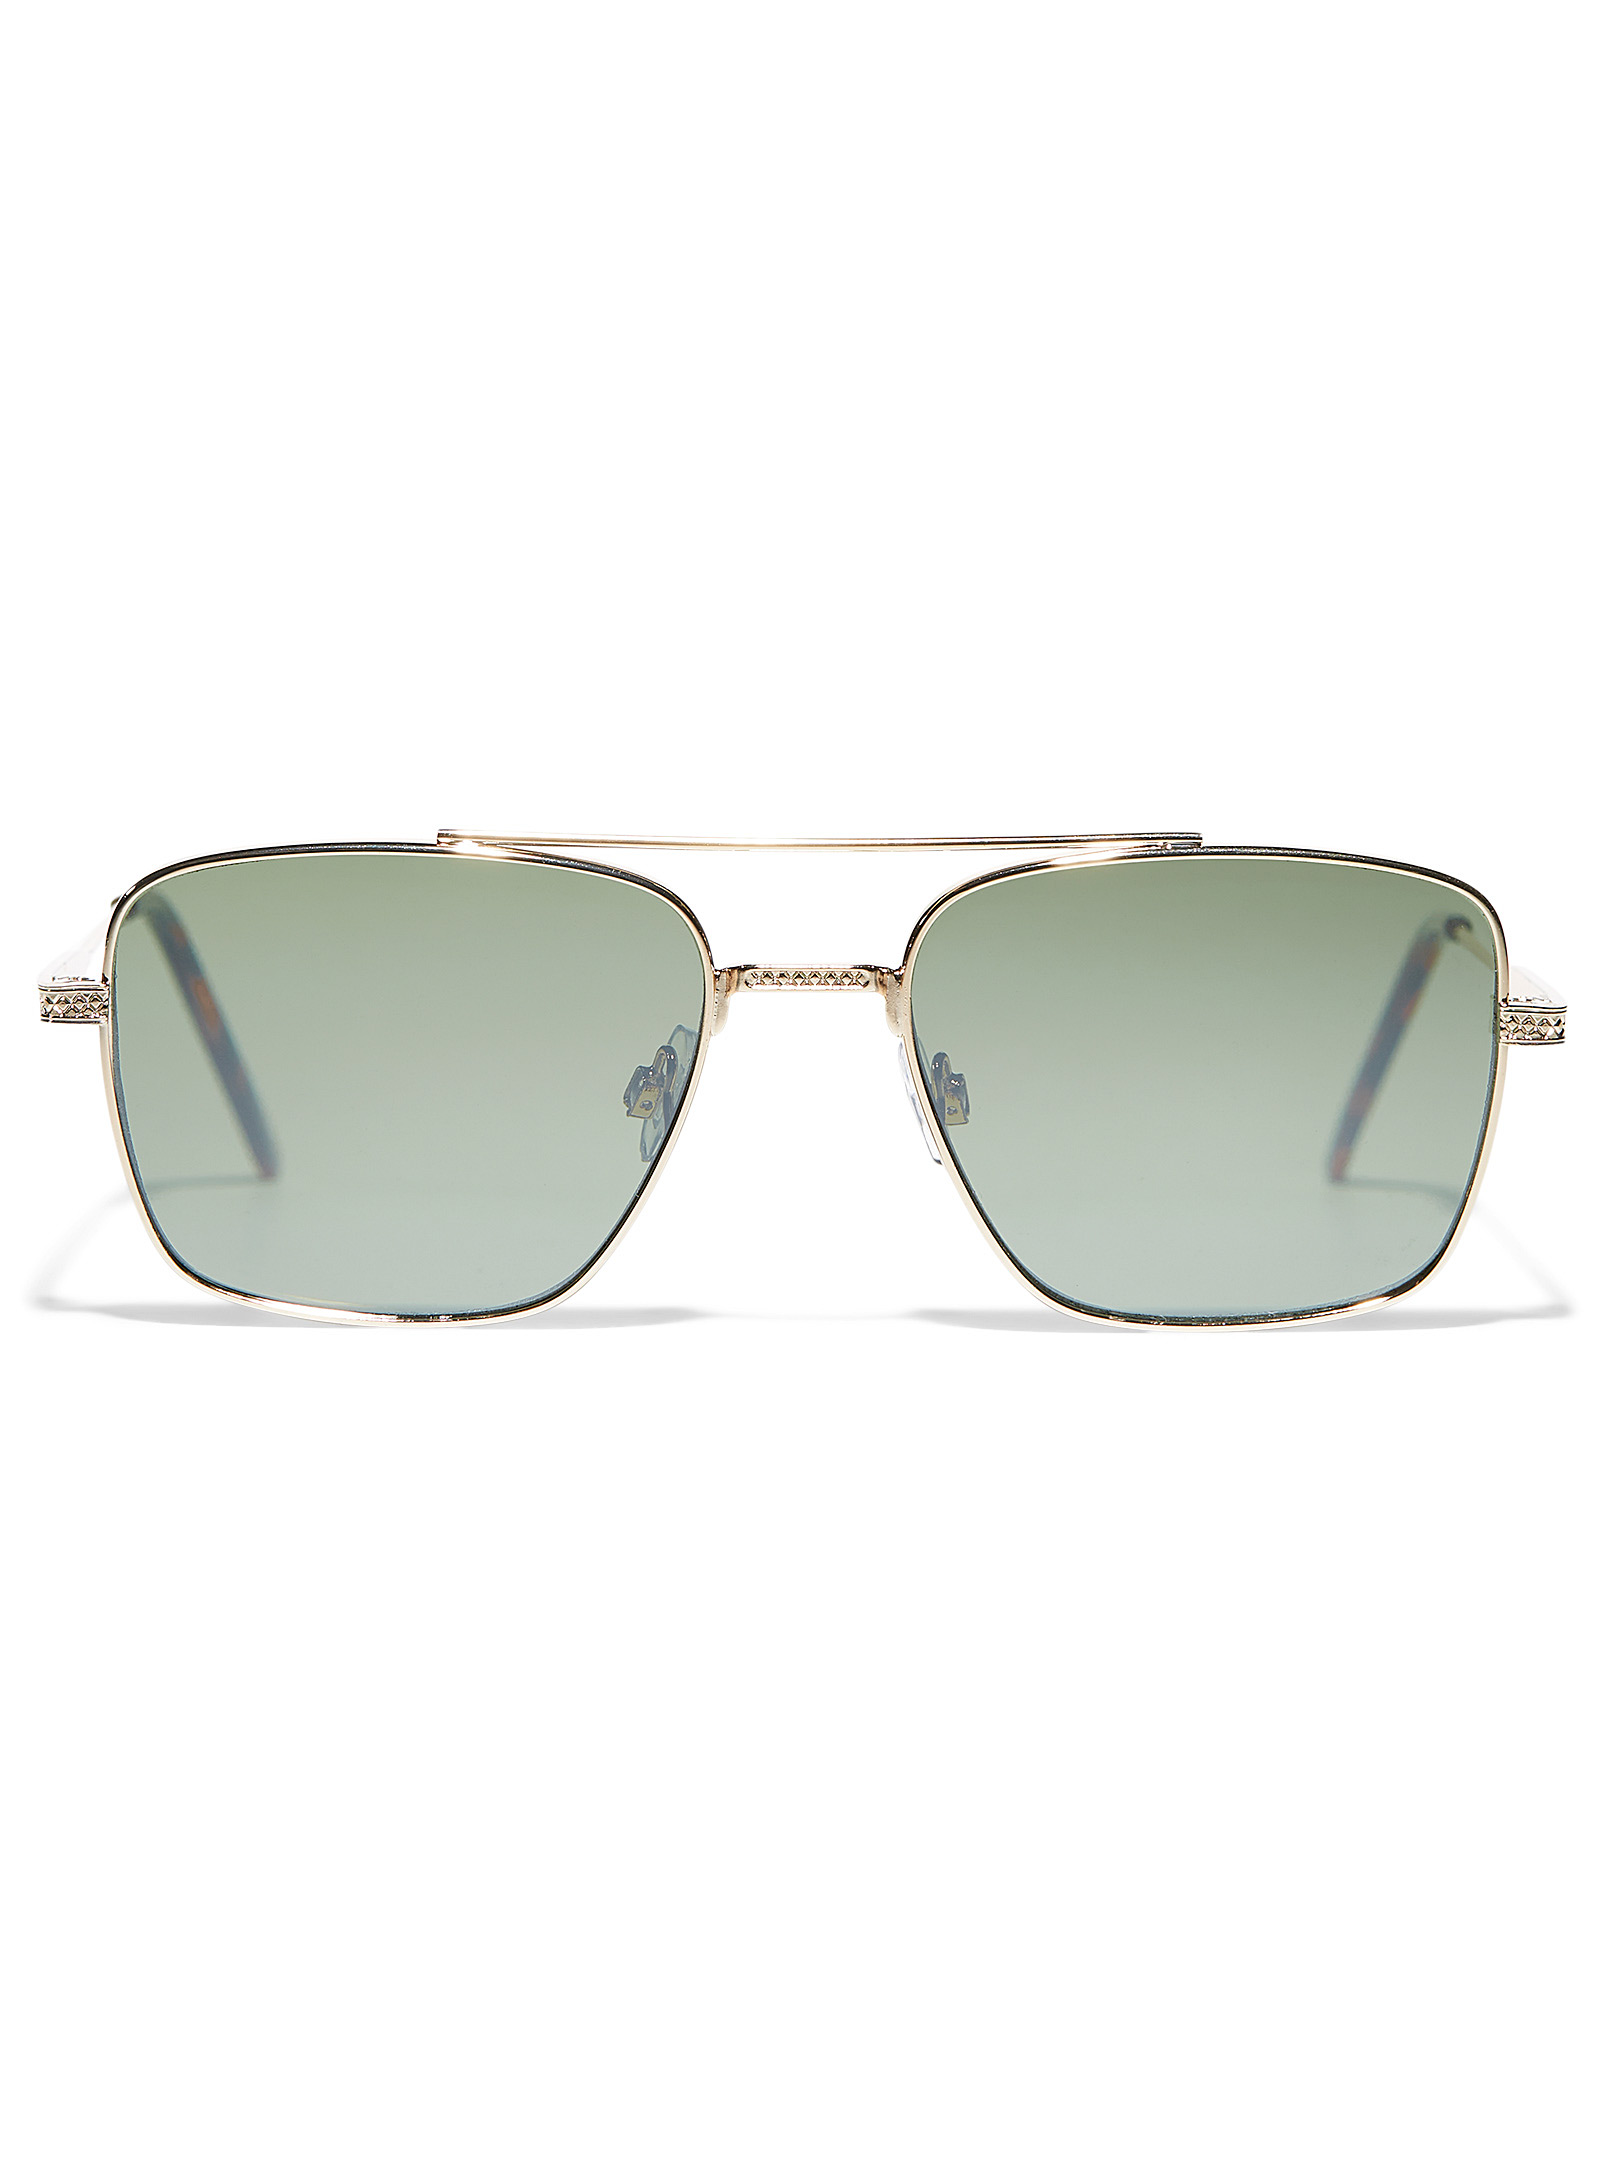 Le 31 Lawrence Aviator Sunglasses In Green